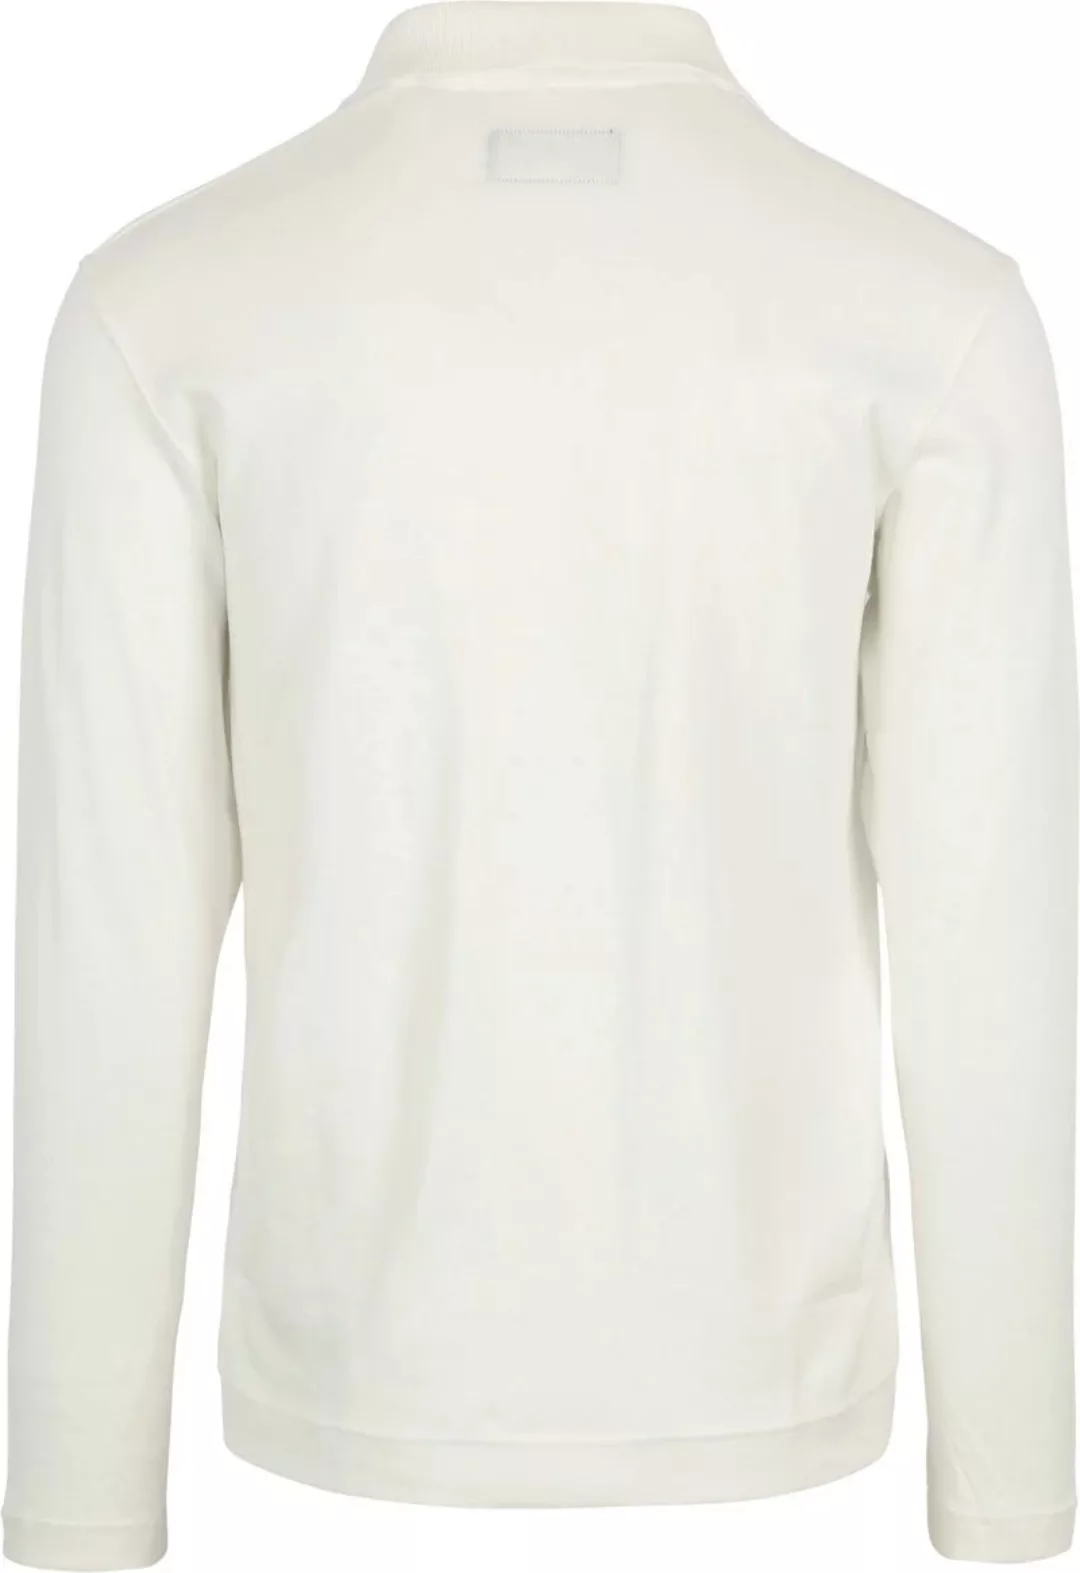 Marc O'Polo Knitted Polohemd Weiß - Größe XL günstig online kaufen